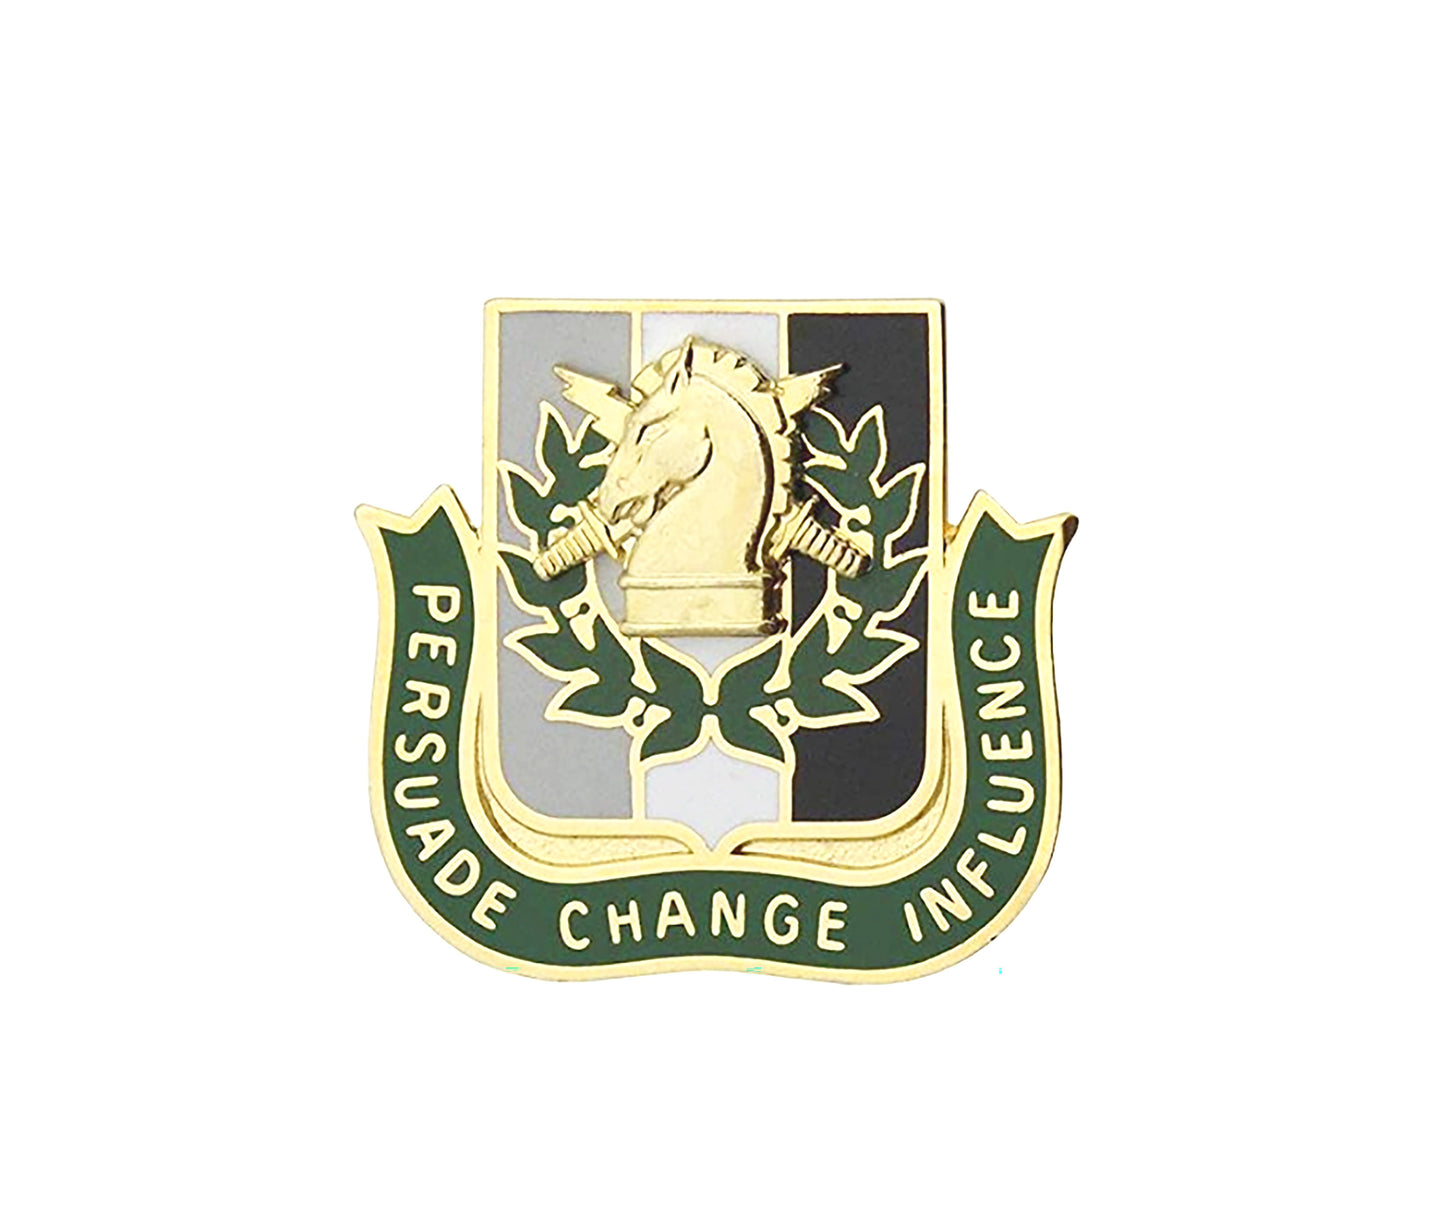 U.S. Army Psychological Operations Regimental Crest